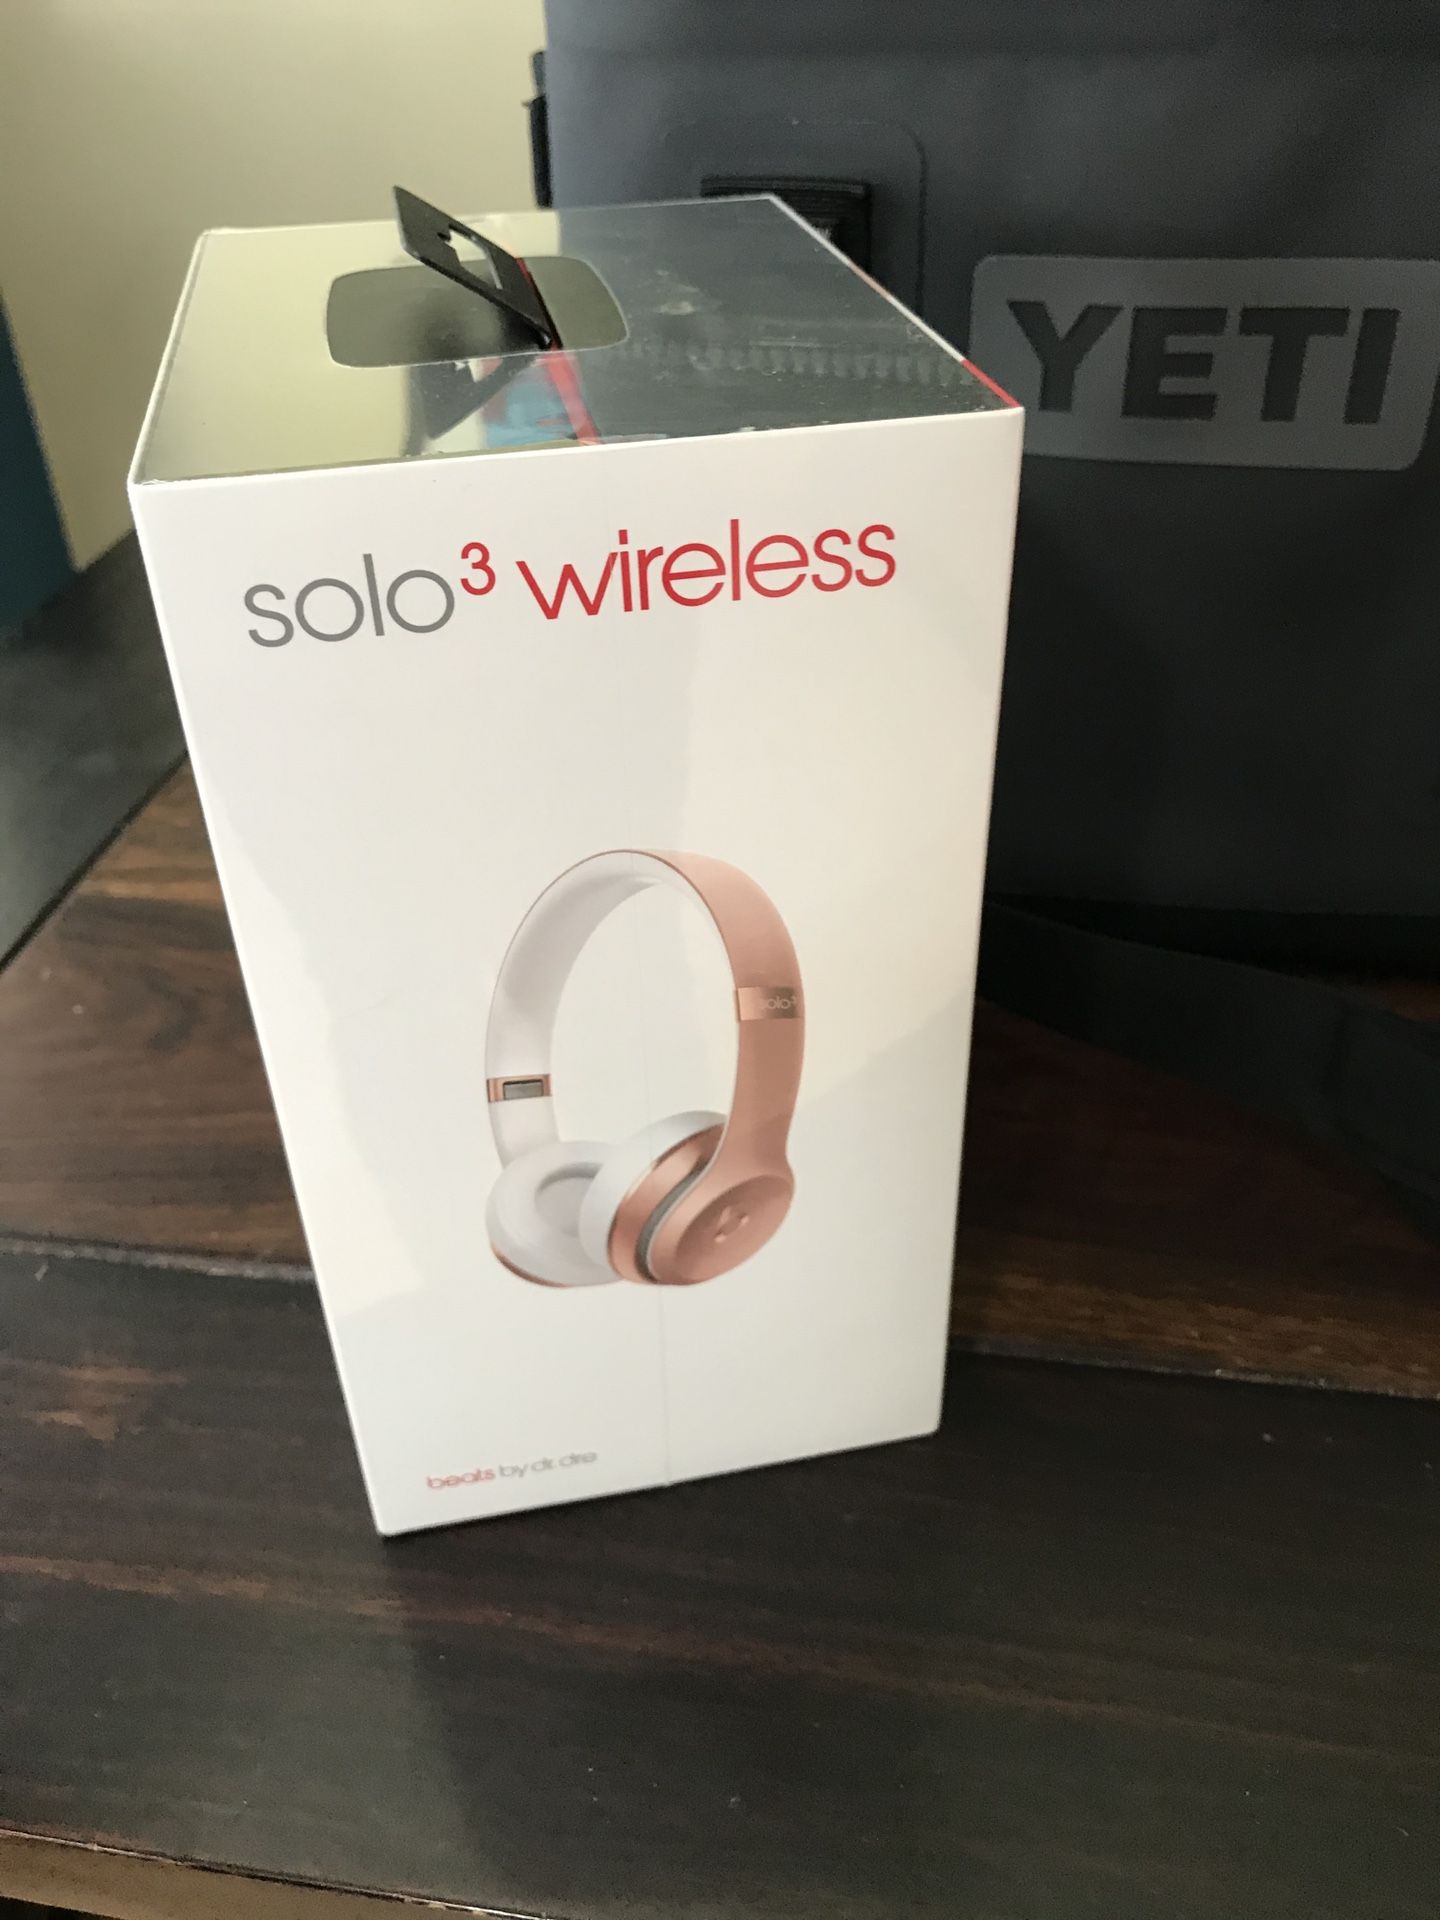 Rose gold beats solo 3 wireless headphones